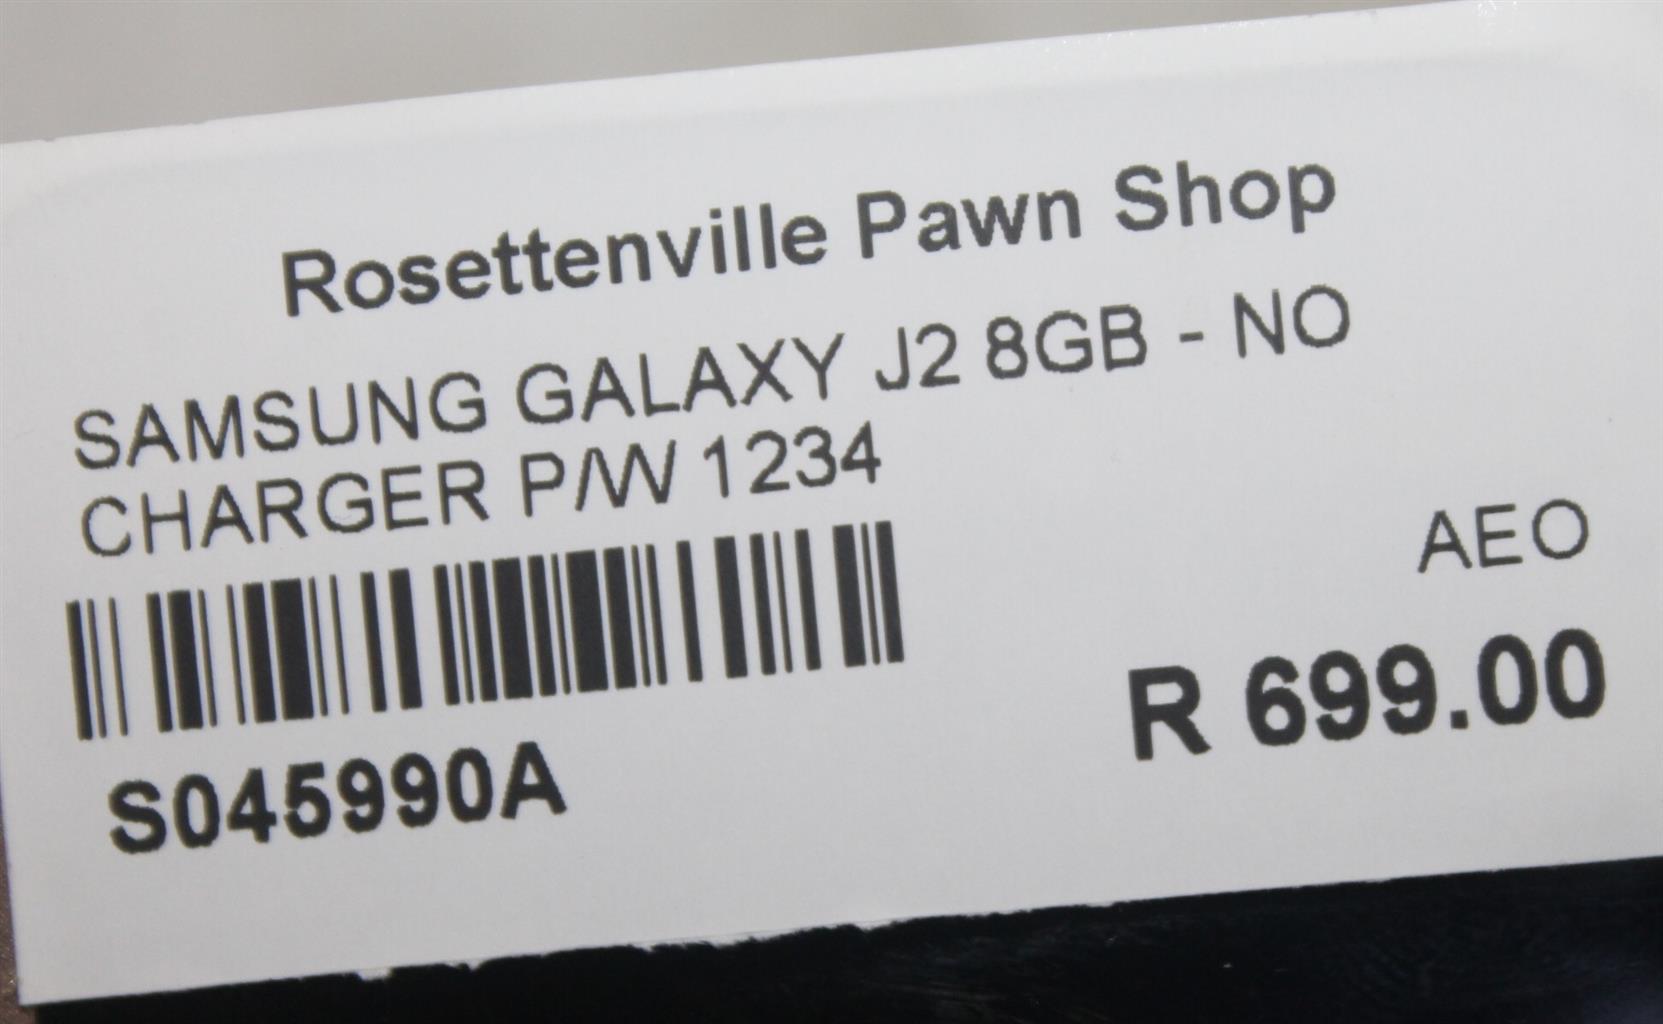 SAMSUNG GALAXY J2 8GB NO CHARGER S045990A #Rosettenvillepawnshop